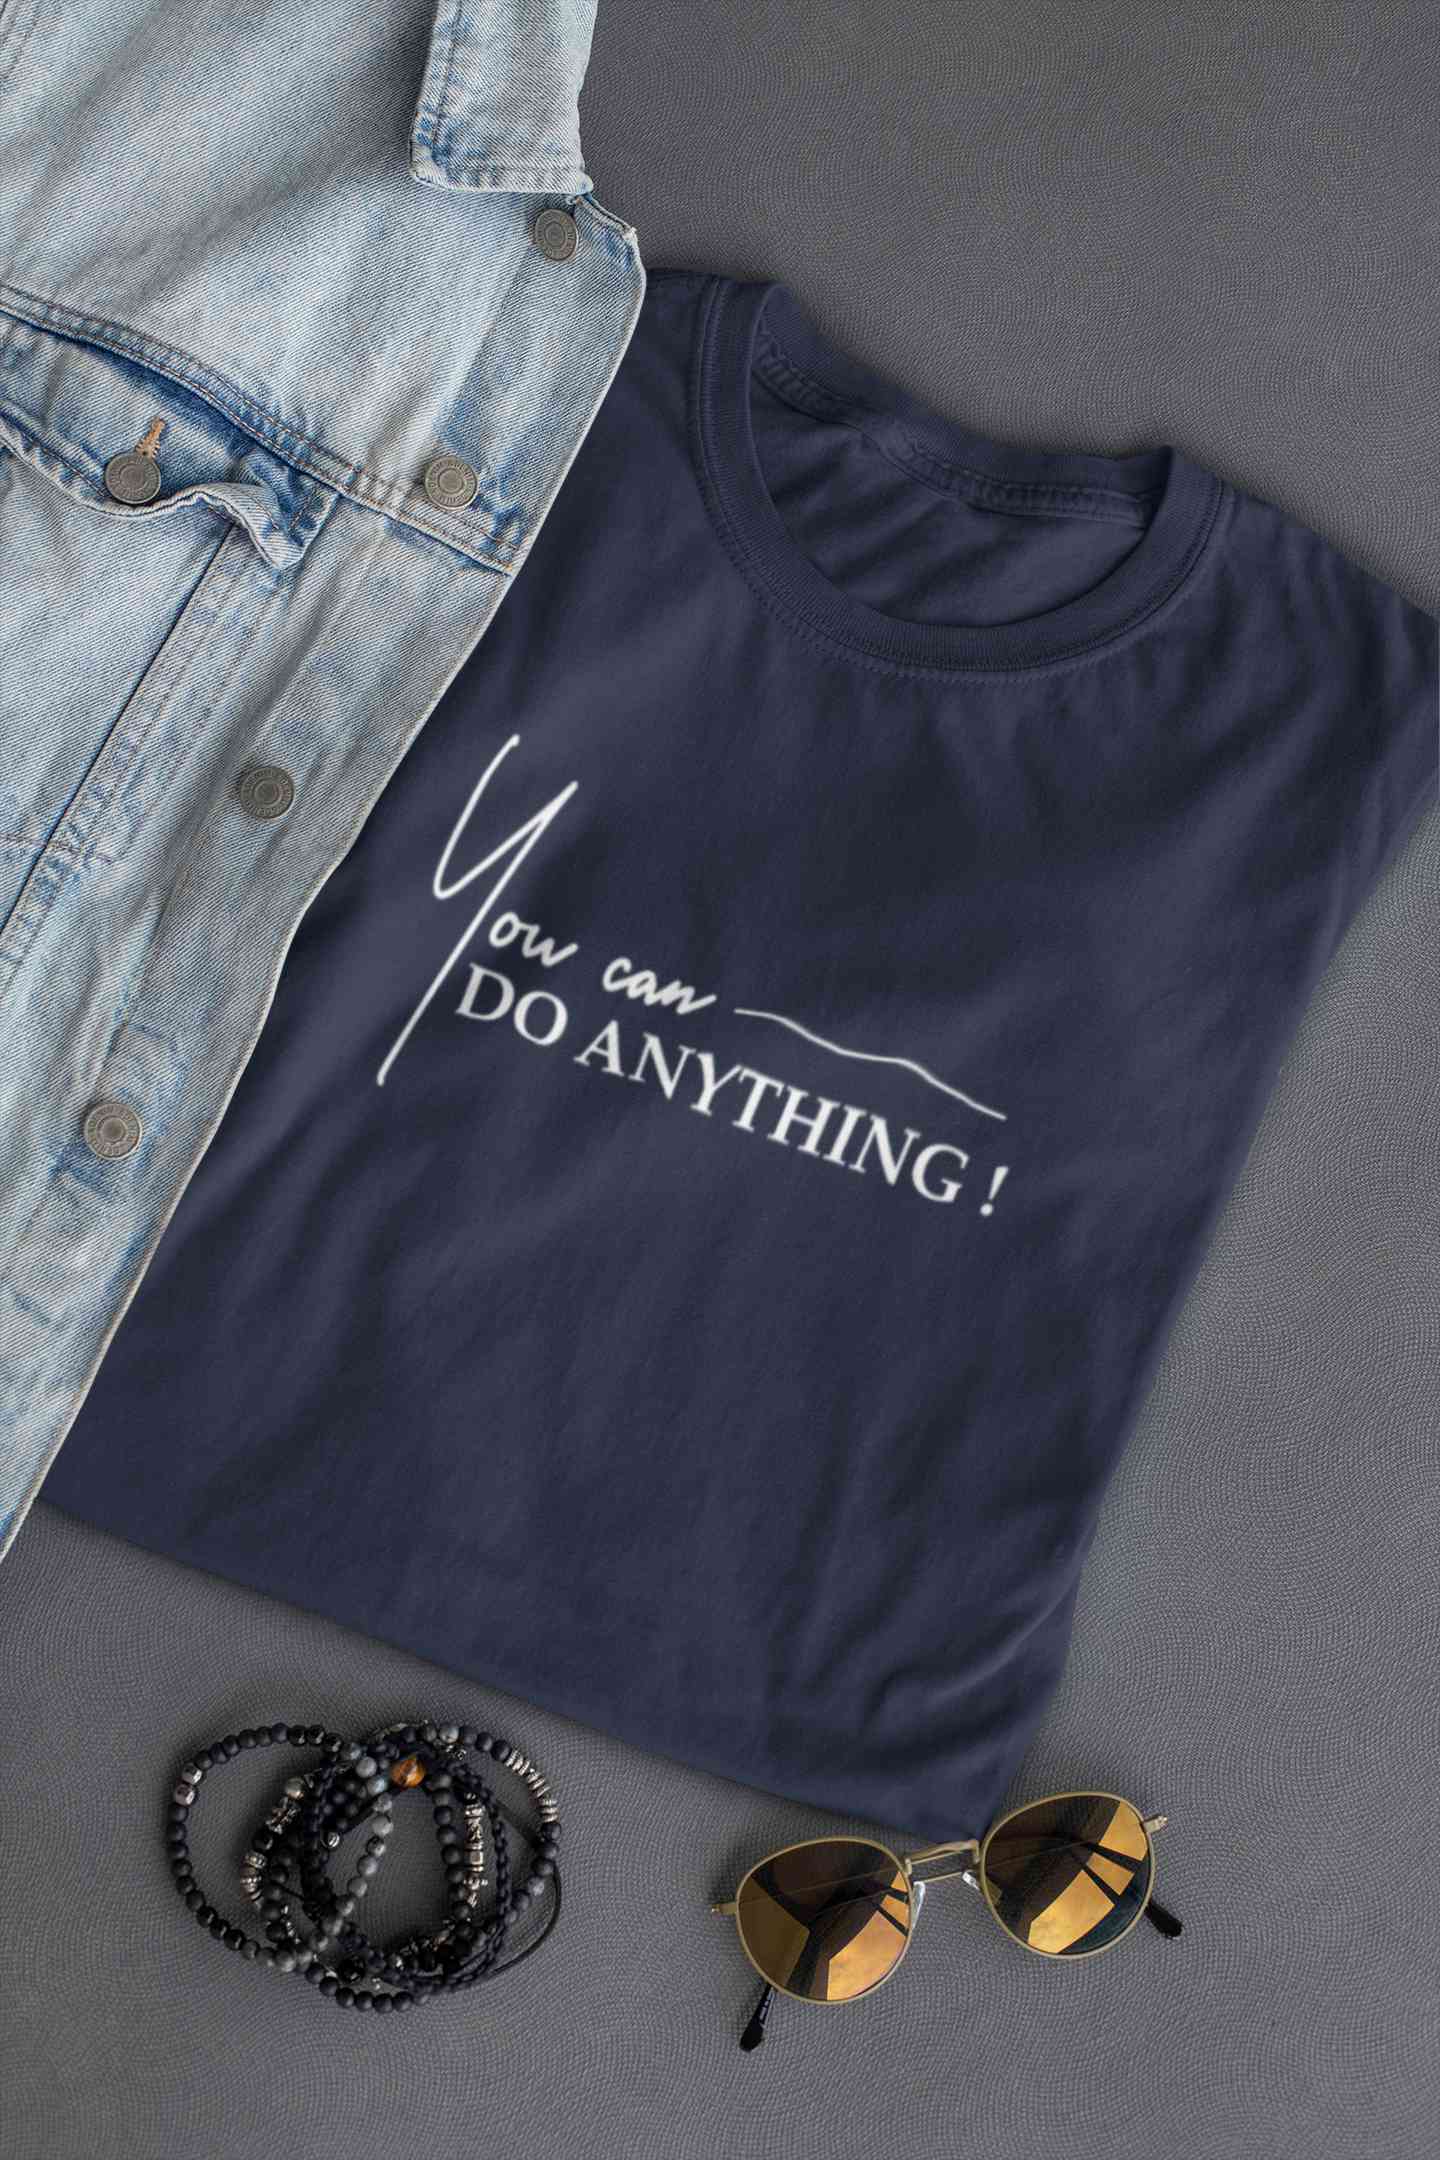 You Can Do Anything Mens Half Sleeves T-shirt- FunkyTeesClub